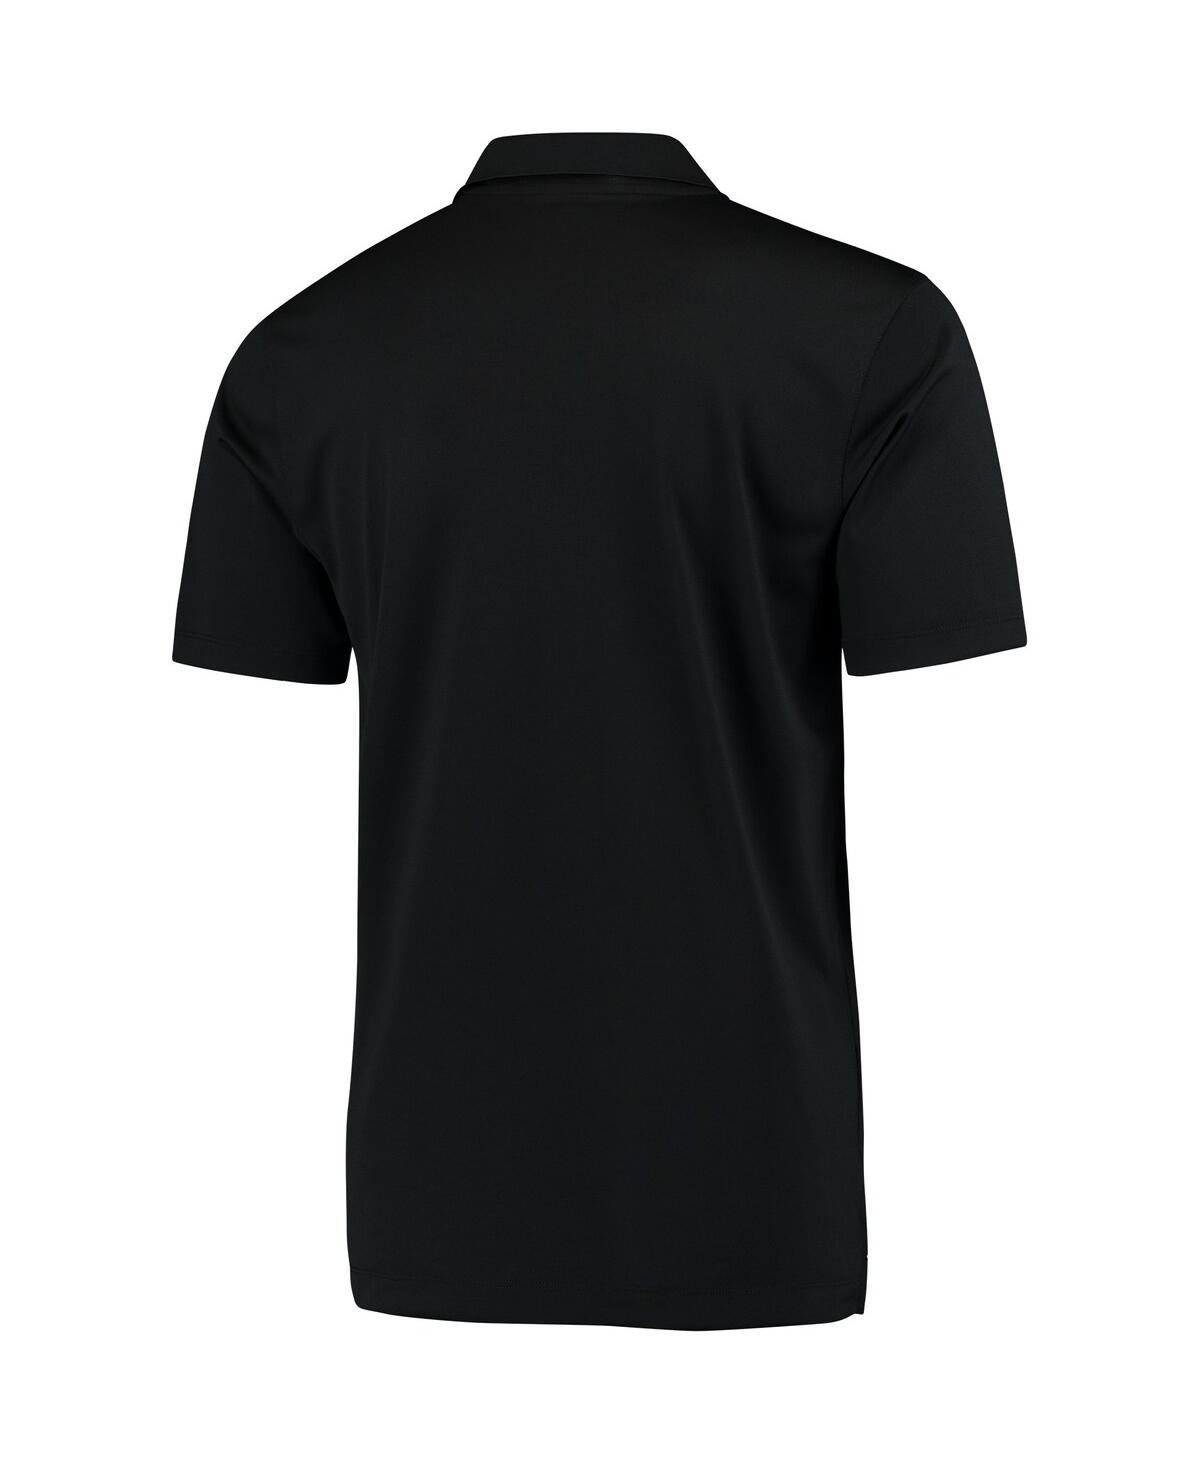 Shop Nike Men's  Black Idaho Vandals Varsity Performance Polo Shirt